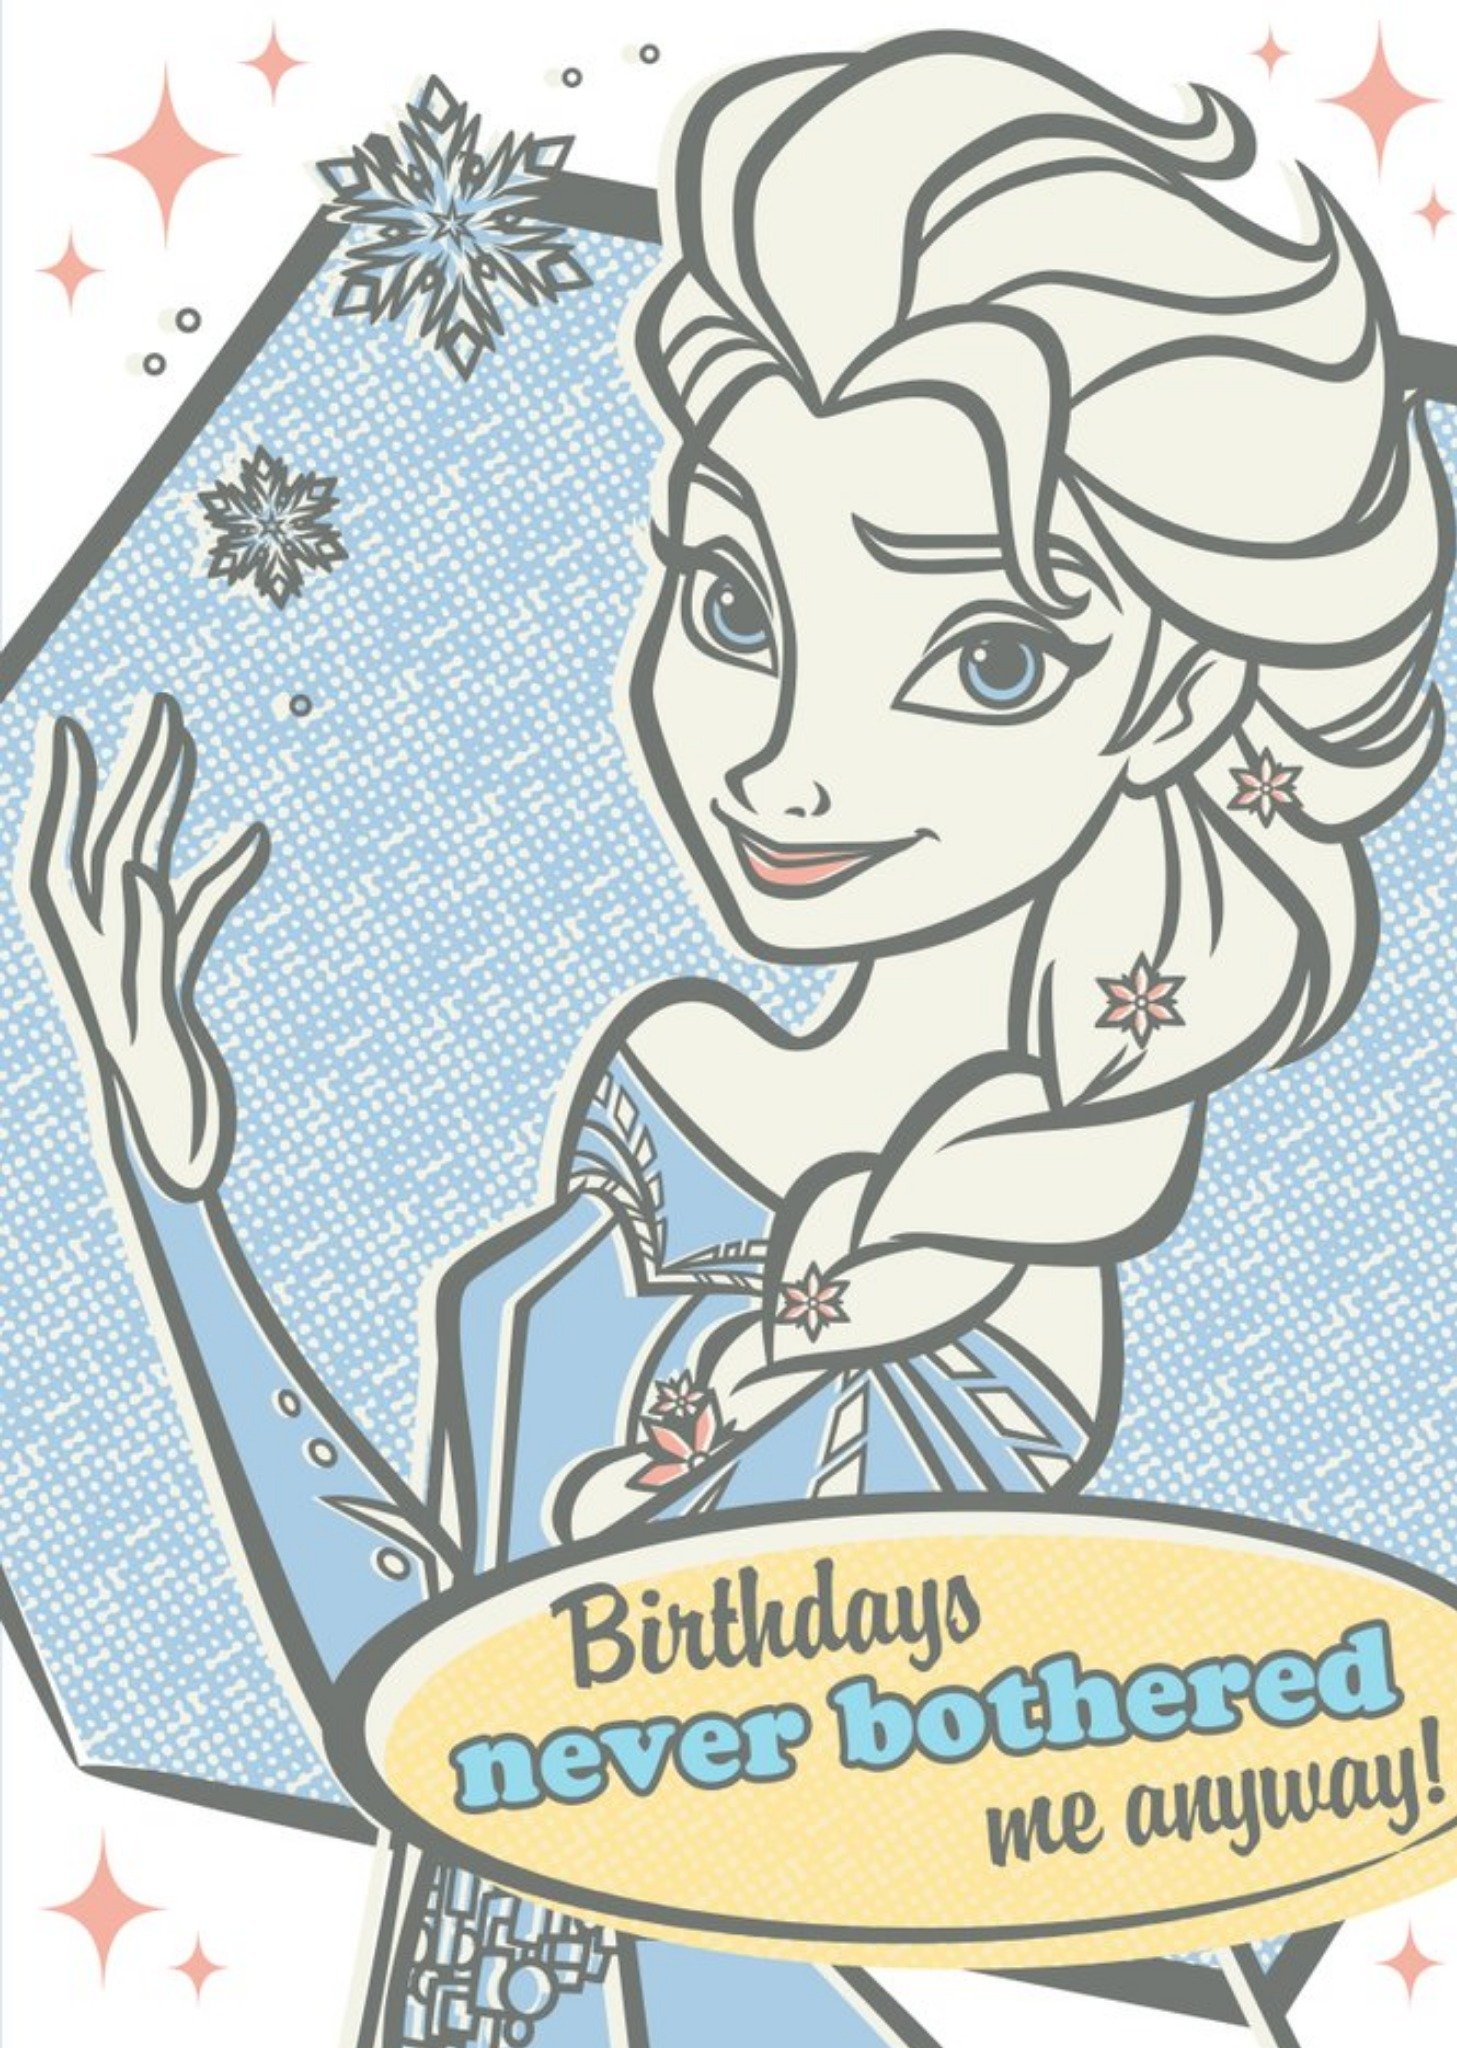 Disney Frozen Elsa Birthdays Never Bothered Me Anyway Card Ecard